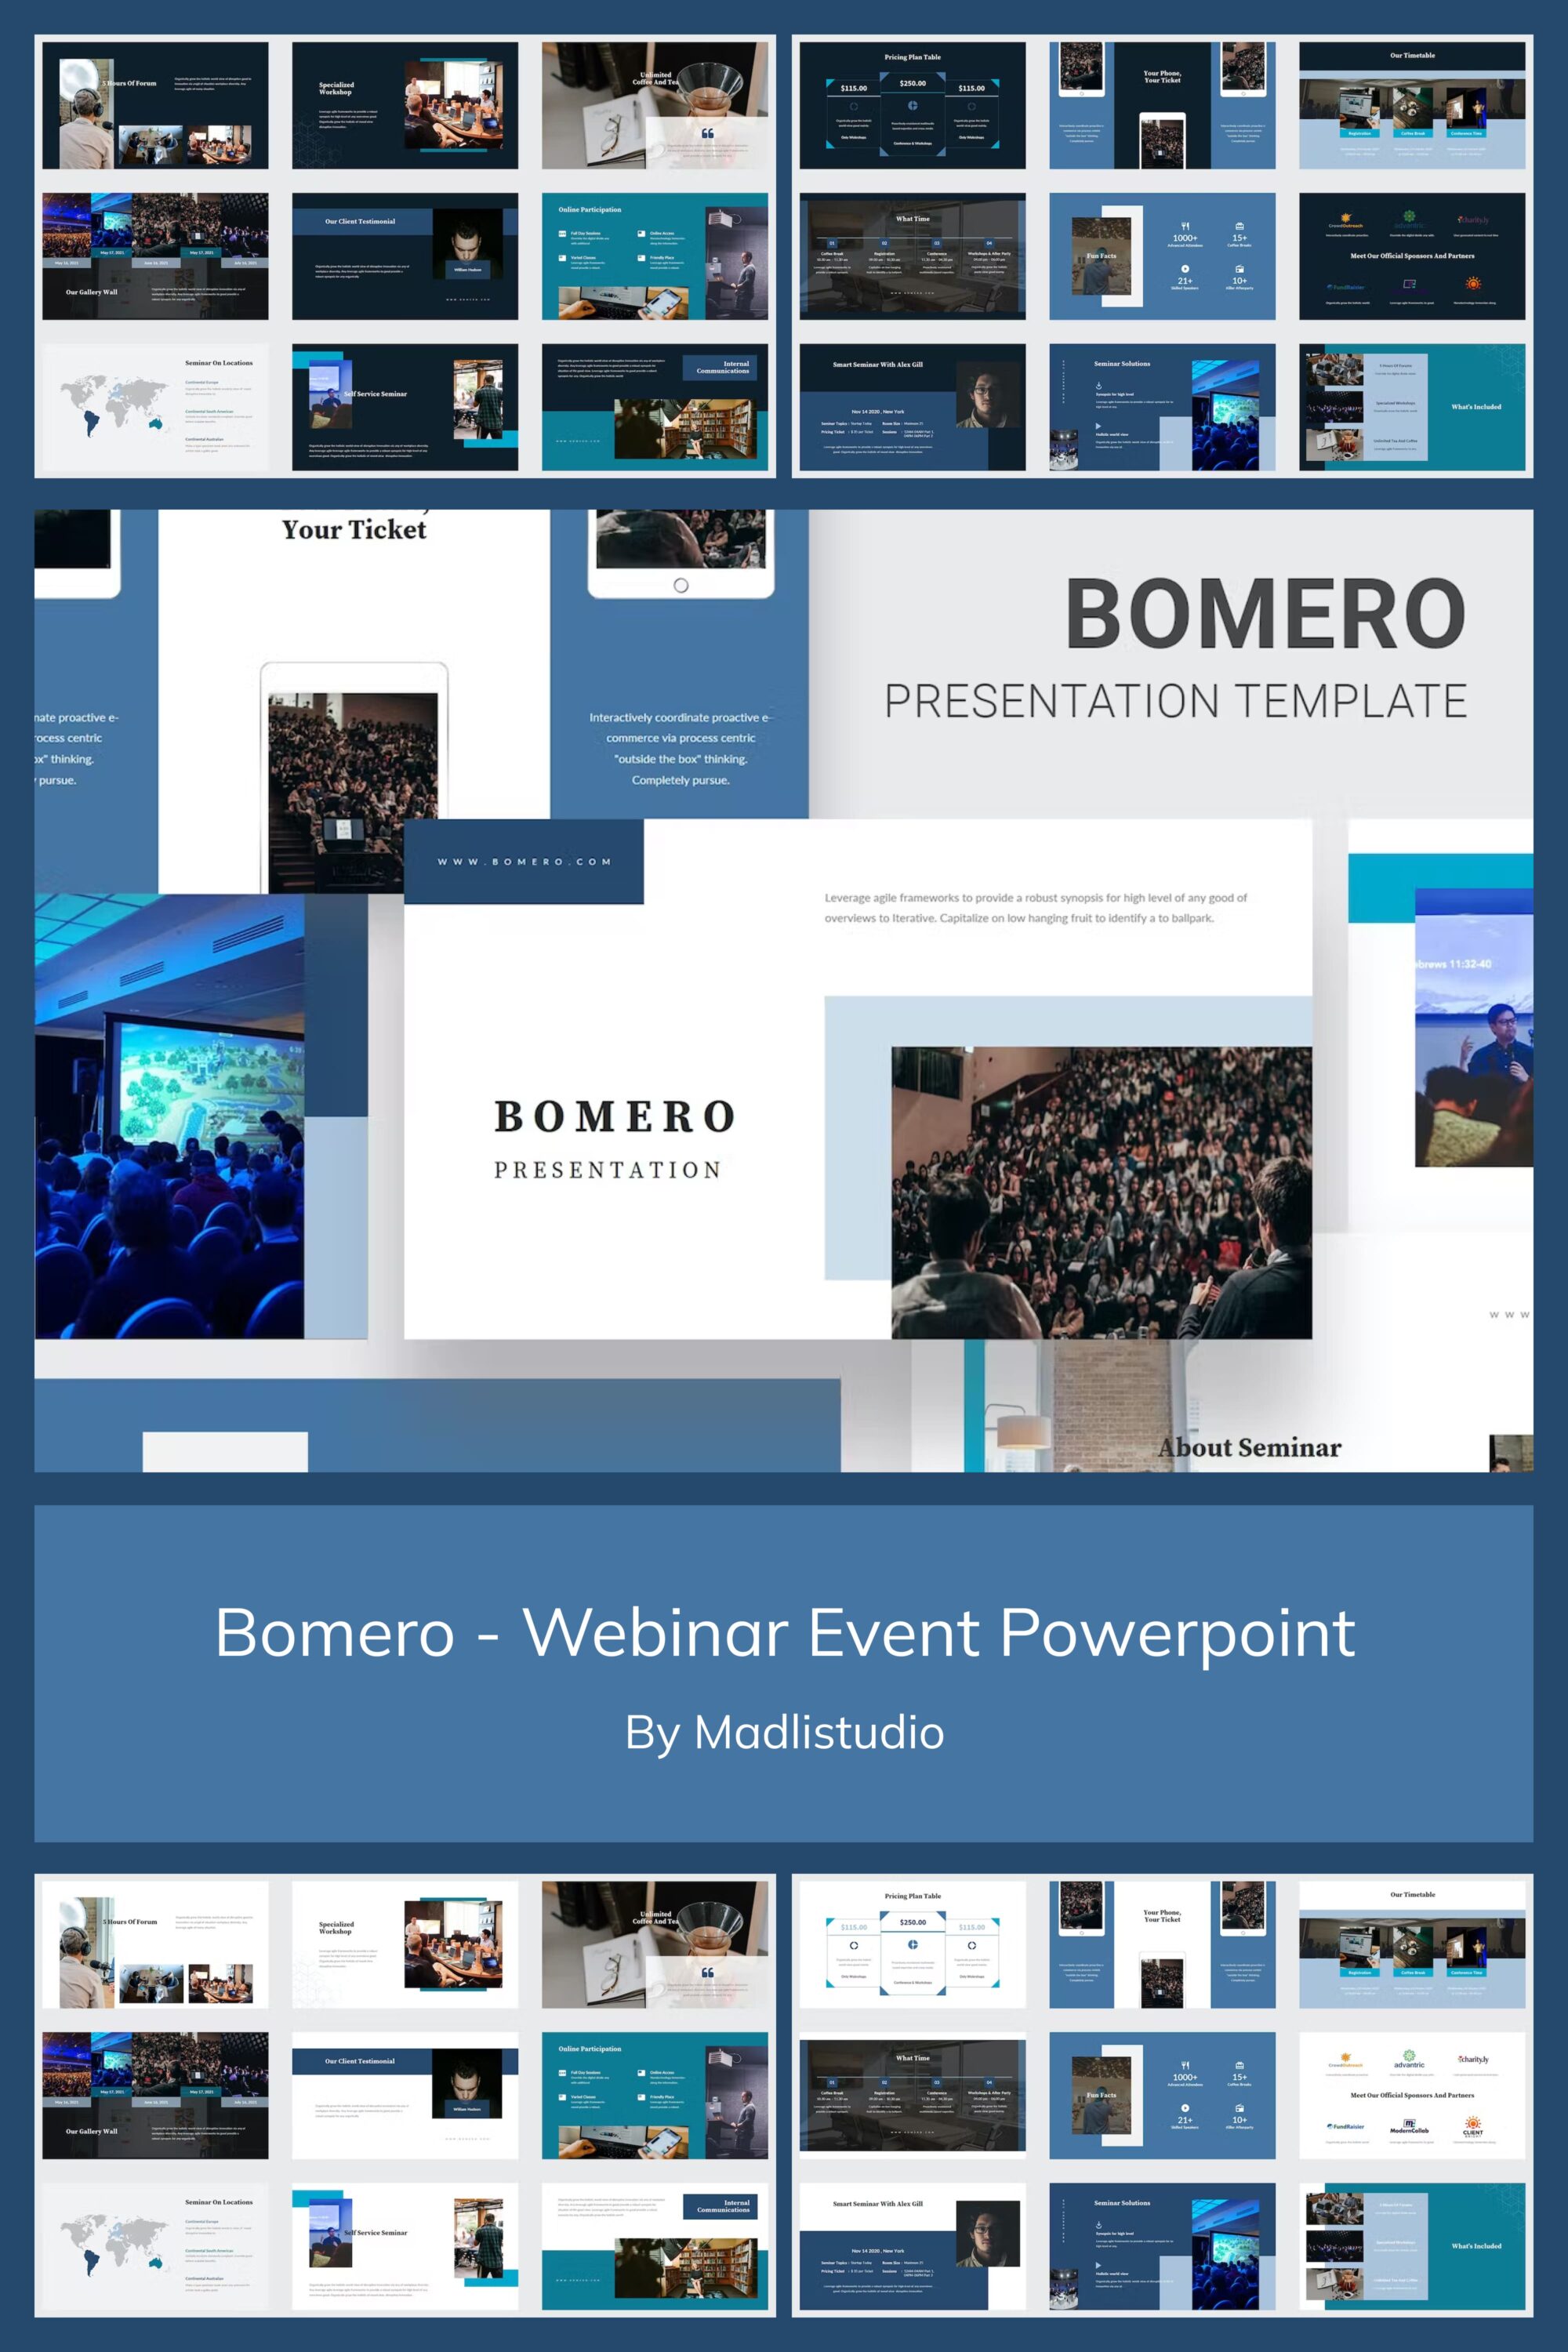 Bomero Webinar Event Powerpoint - pinterest image preview.